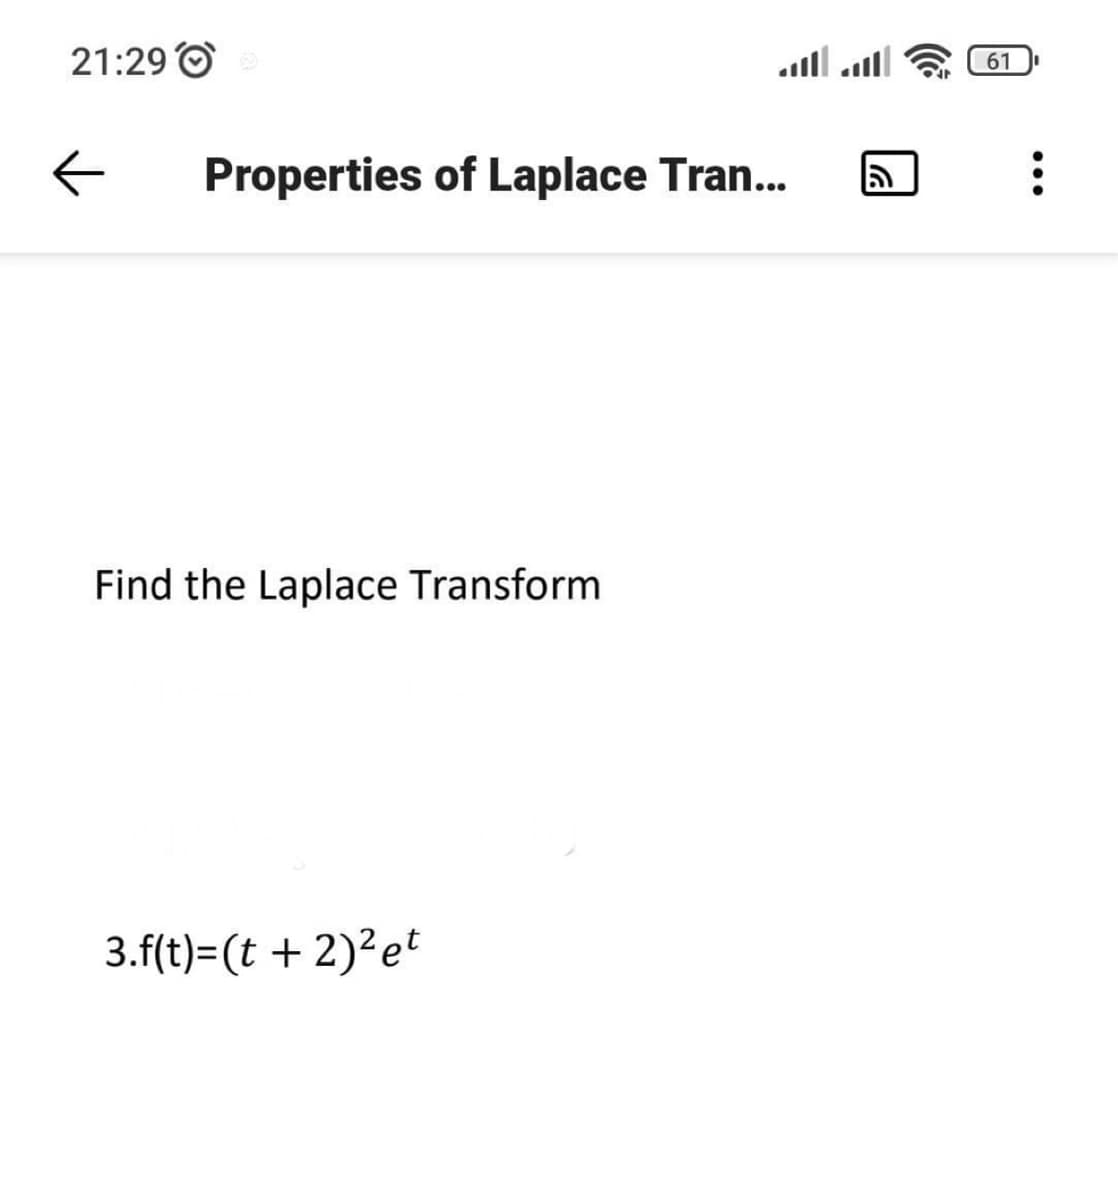 21:29 O
61
Properties of Laplace Tran...
Find the Laplace Transform
3.f(t)=(t +2)²et
